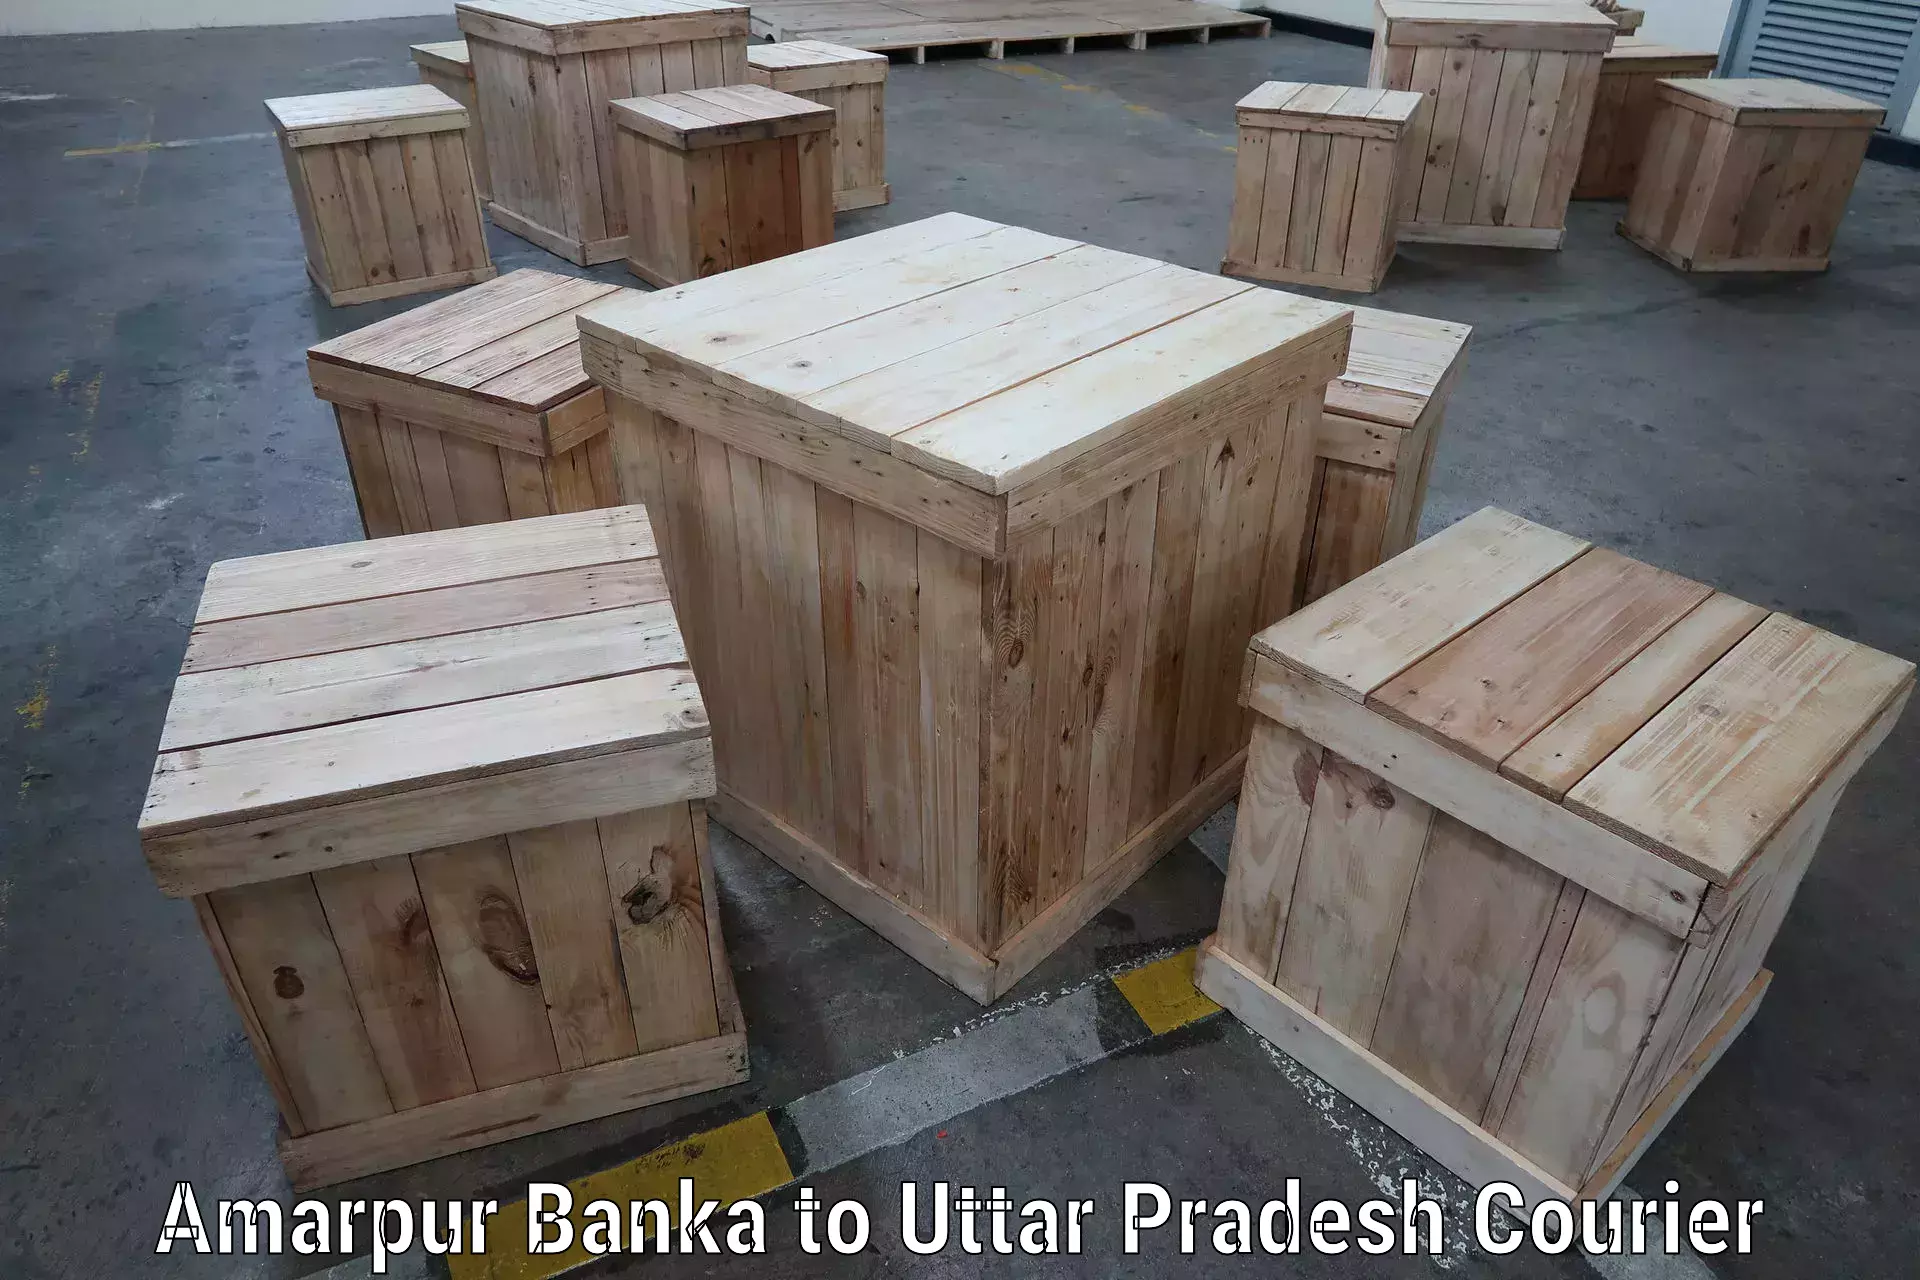 Residential courier service Amarpur Banka to Varanasi